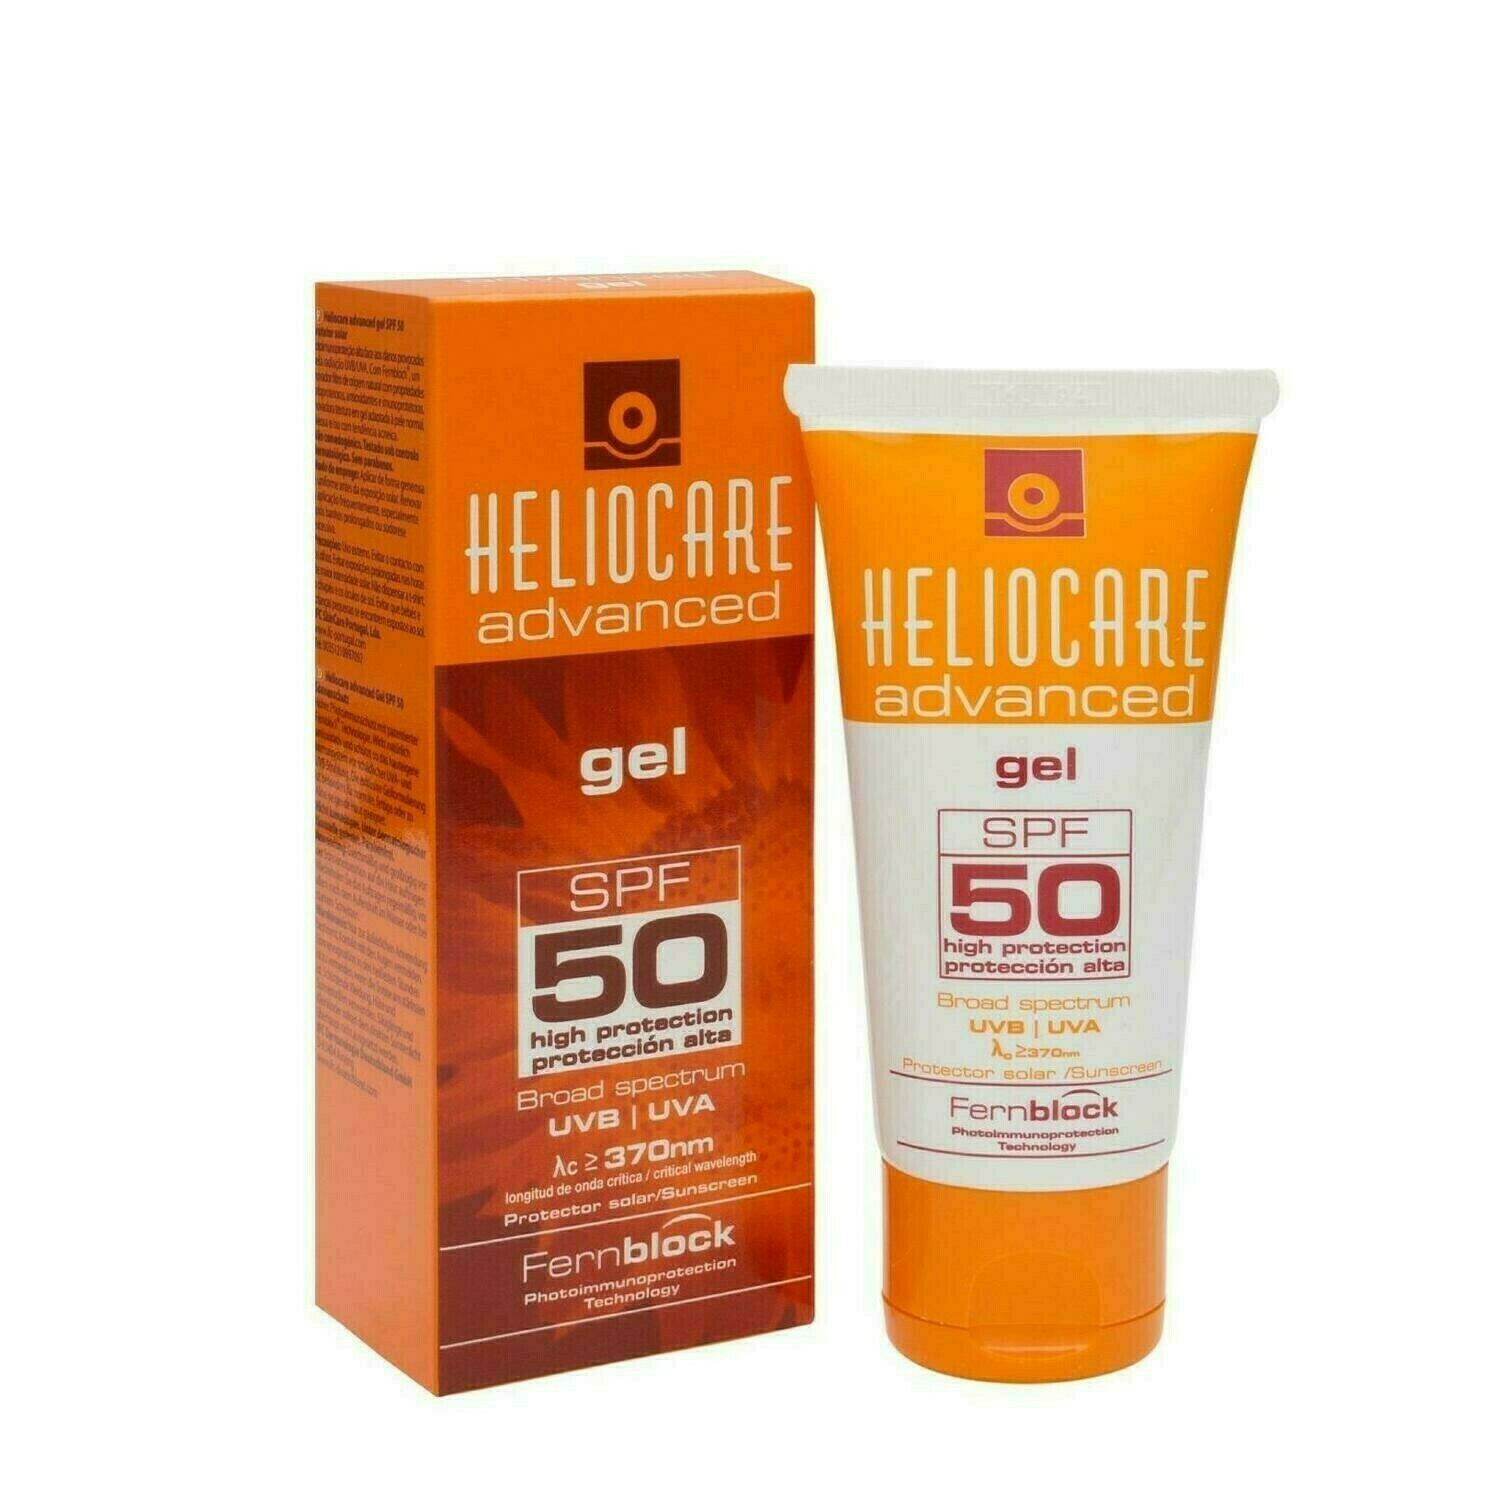 HELIOCARE SPF 50 GEL 50 ML